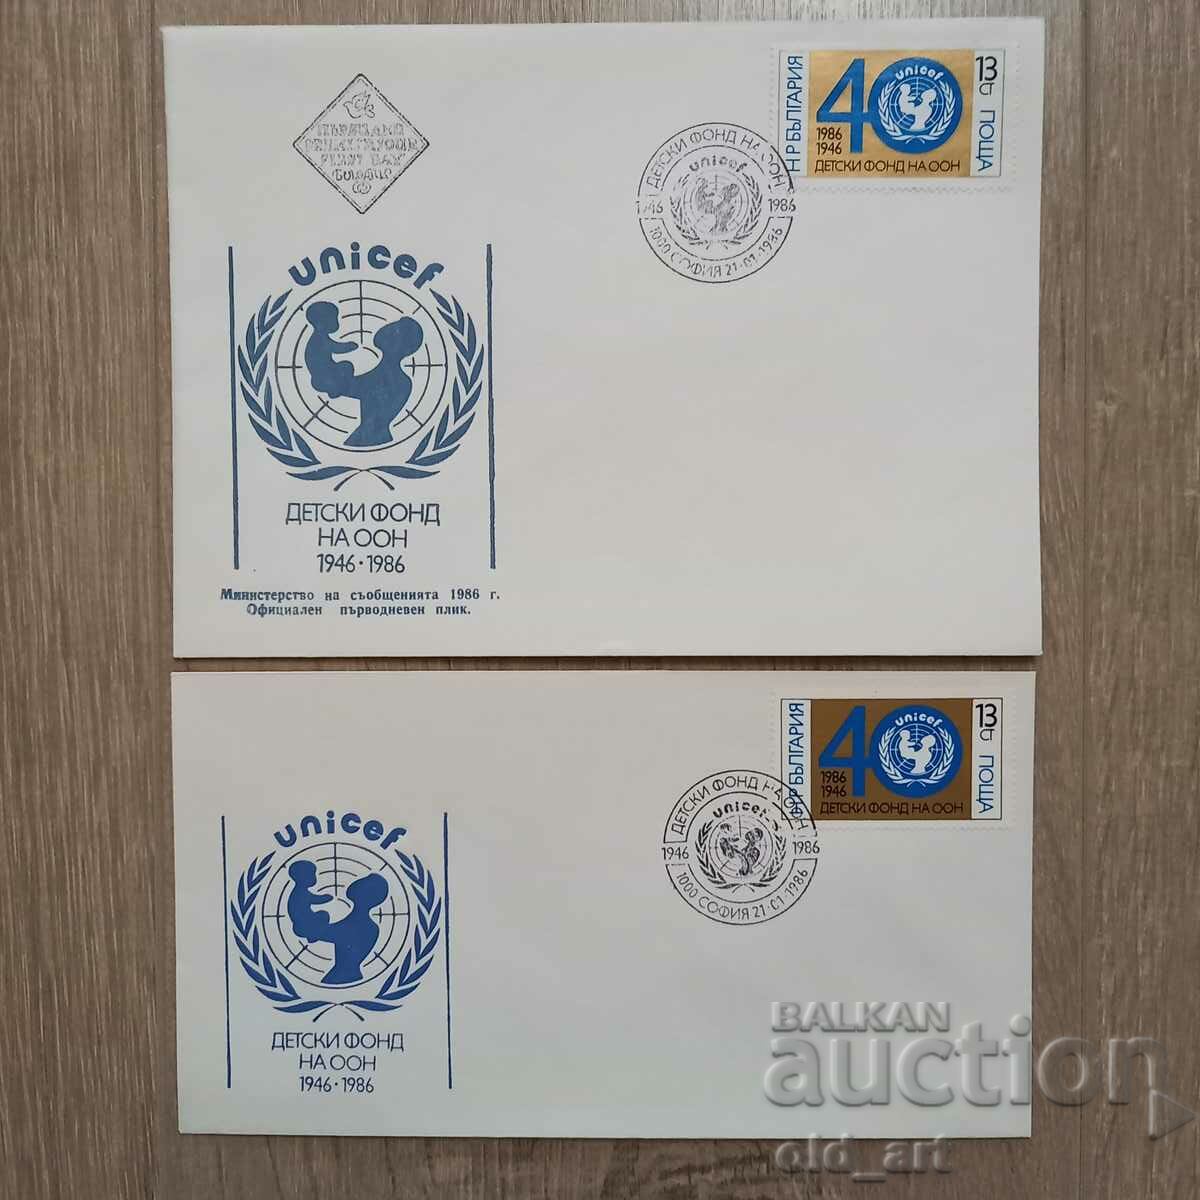 Mailing envelopes - UNICEF - United Nations Children's Fund